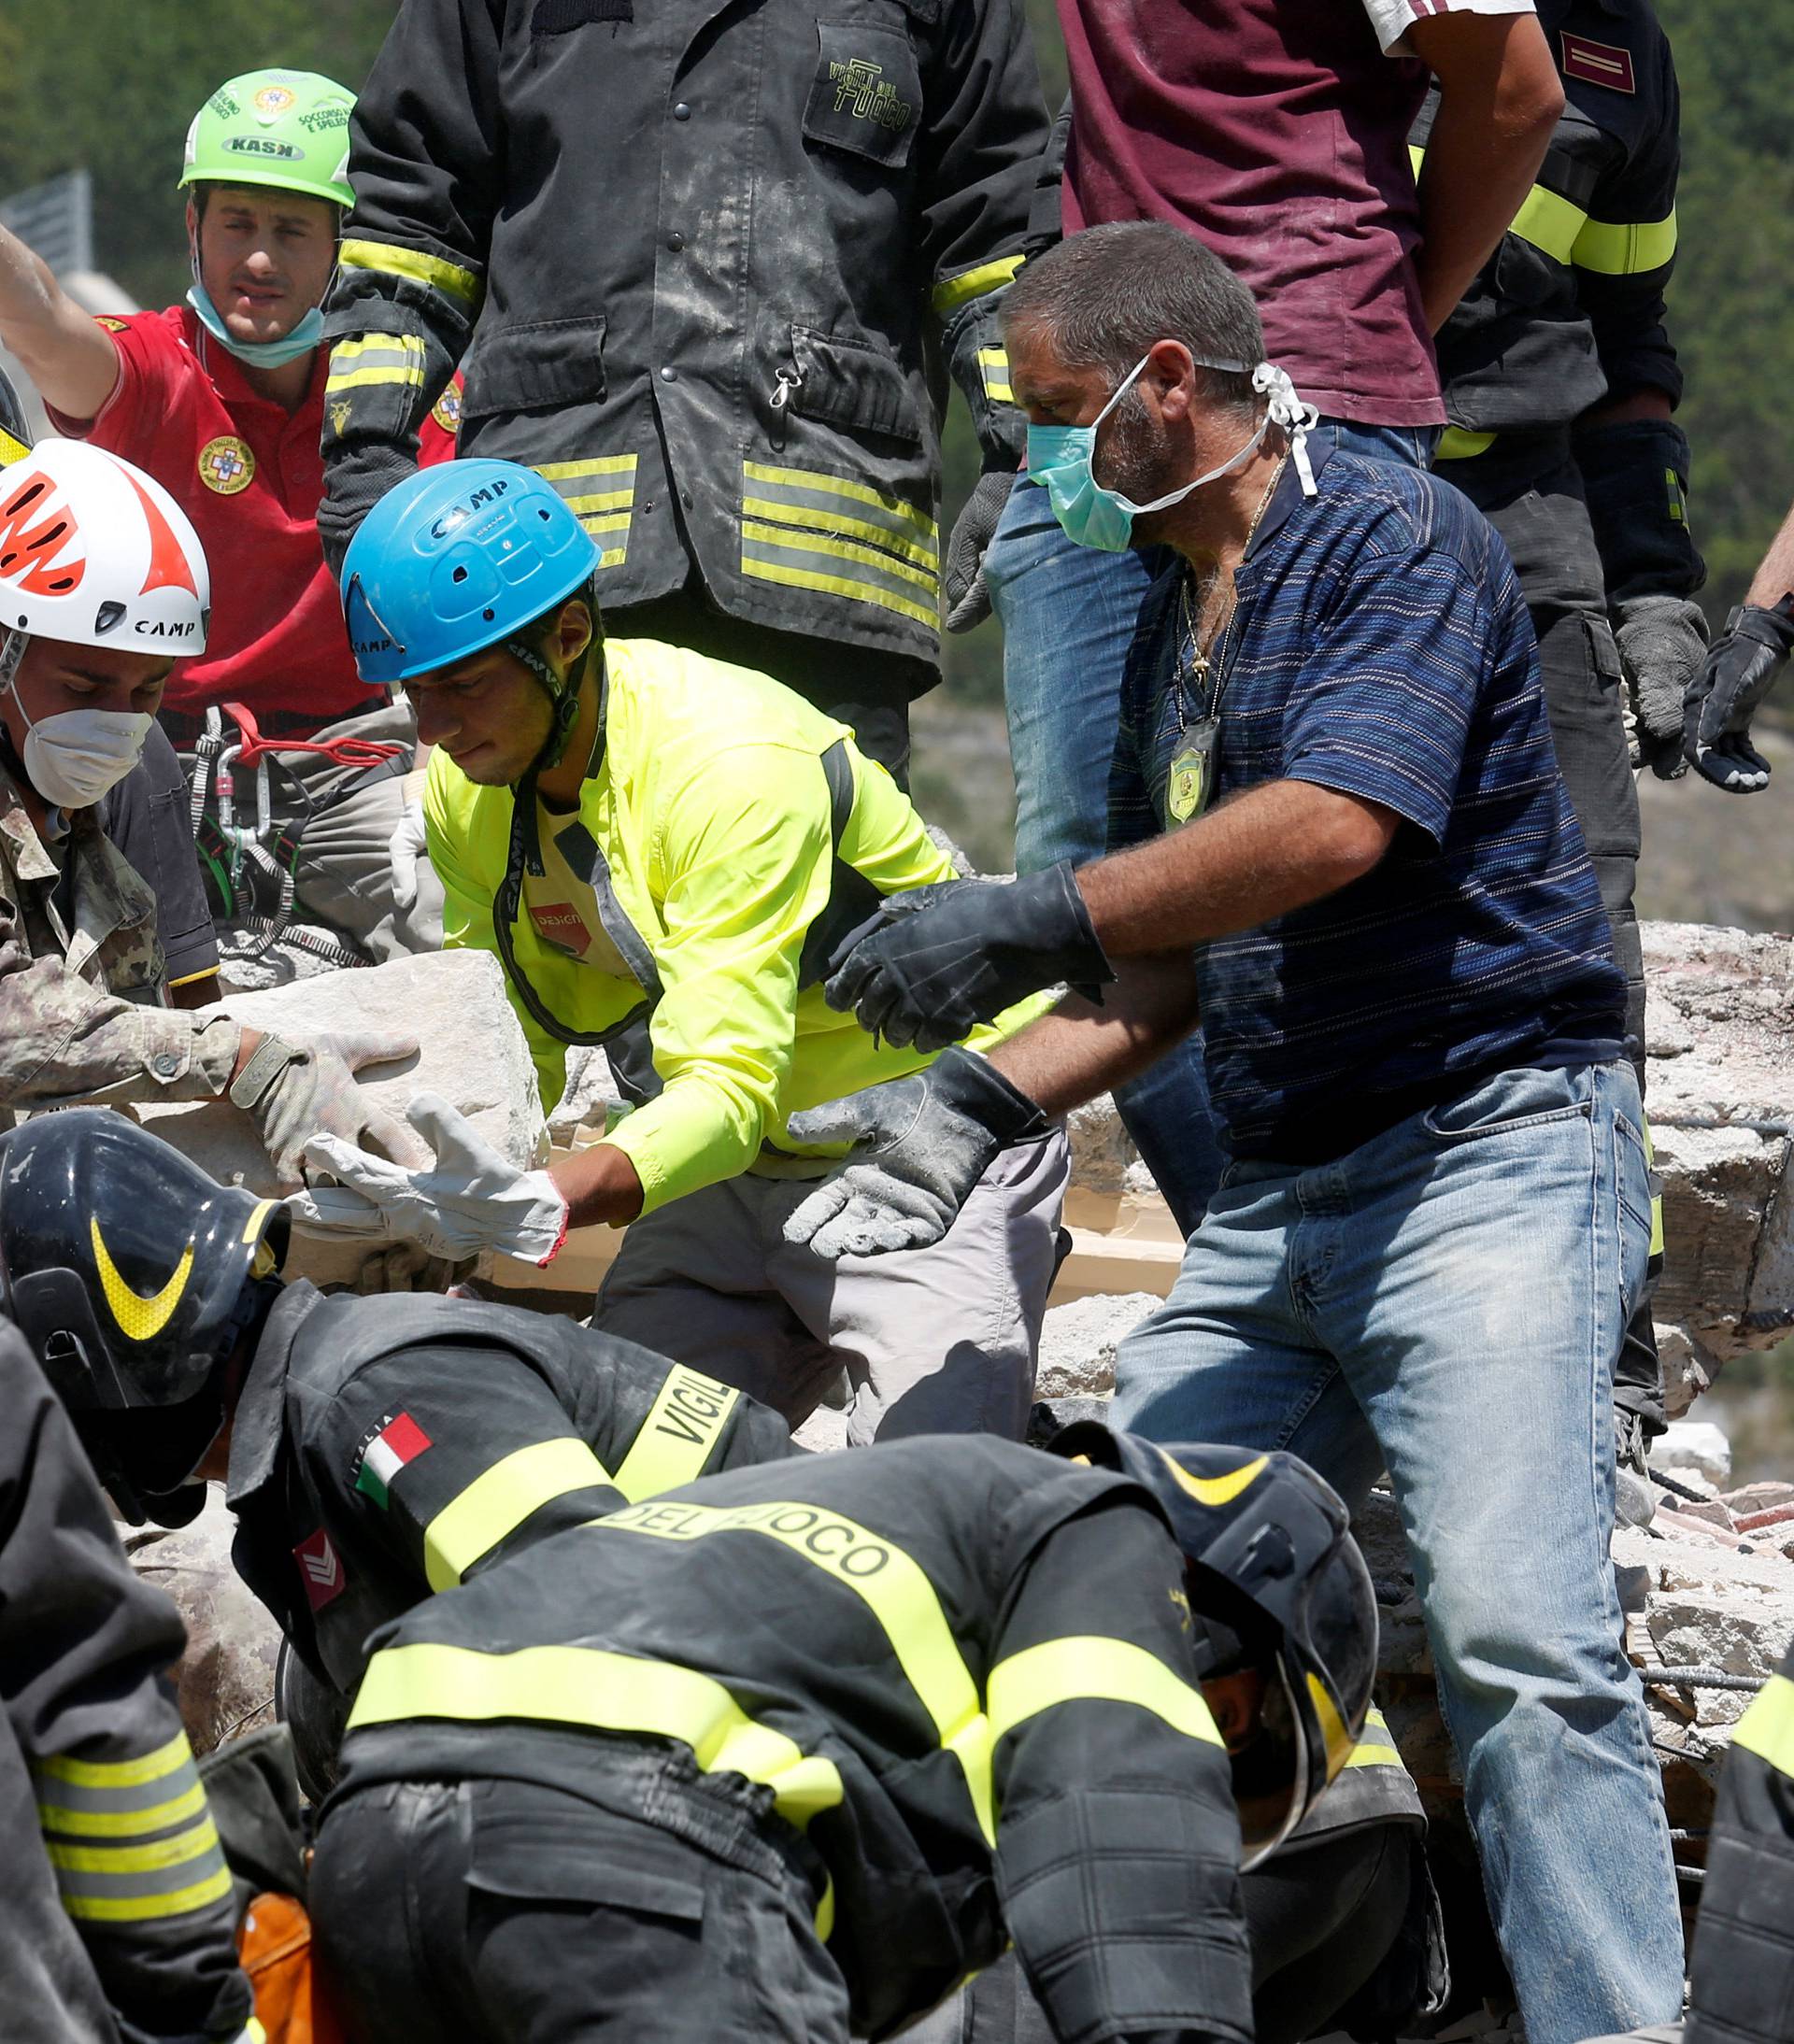 Rescuers work following an earthquake at Pescara del Tronto